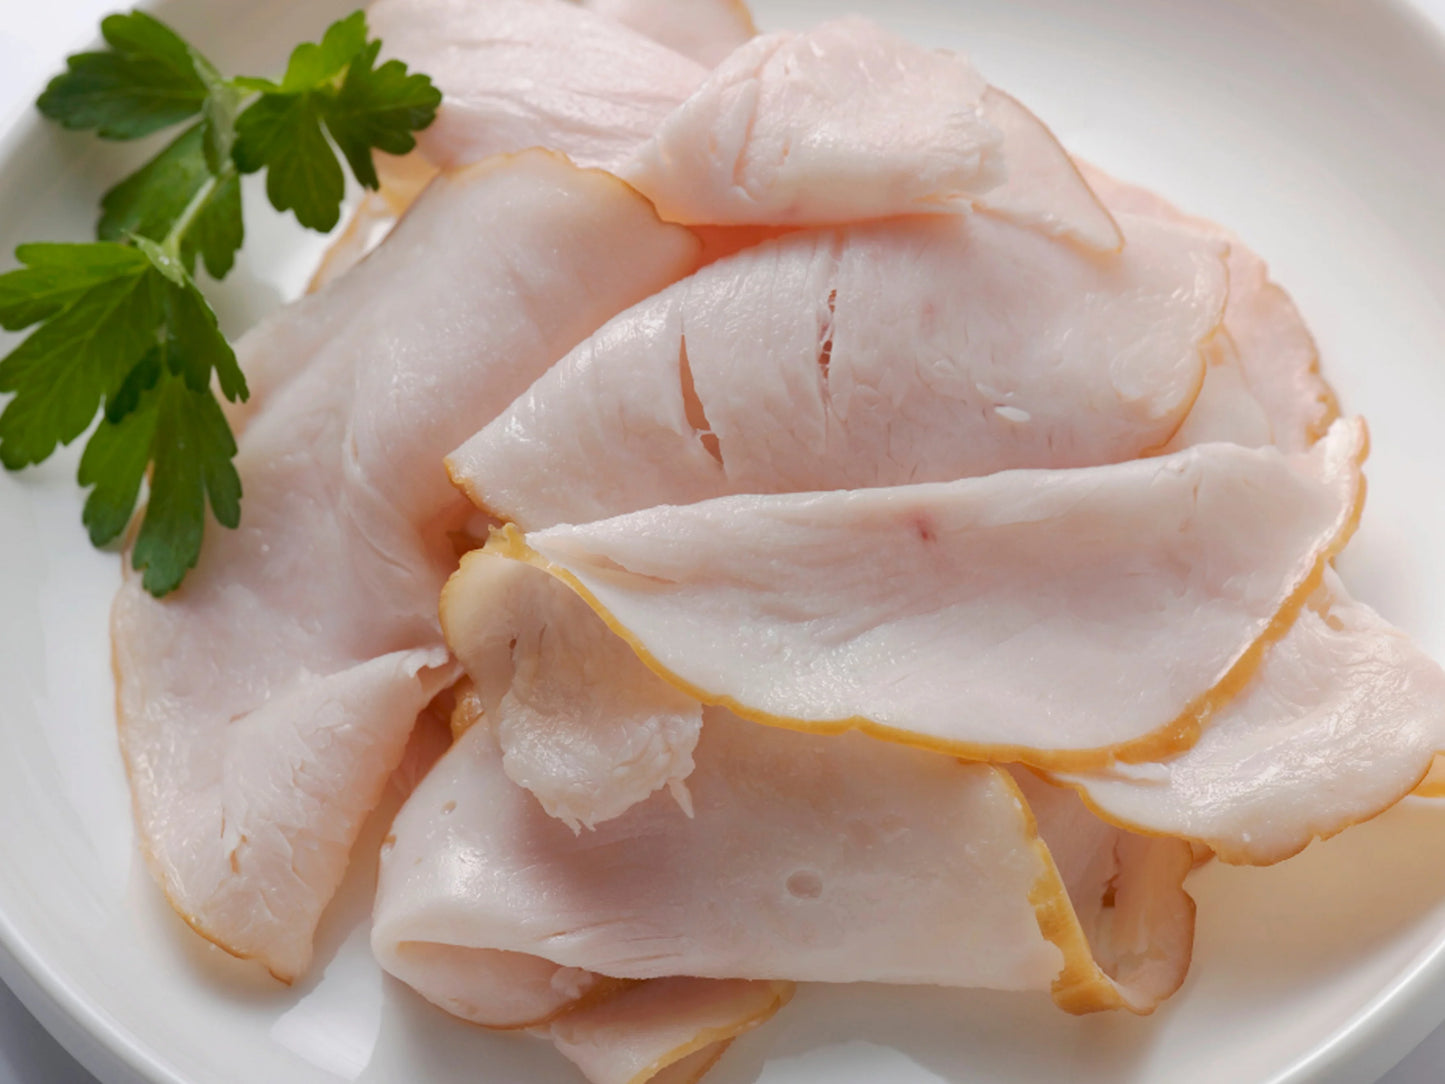 Halal Sliced Turkey Breast (Lunch Meat)